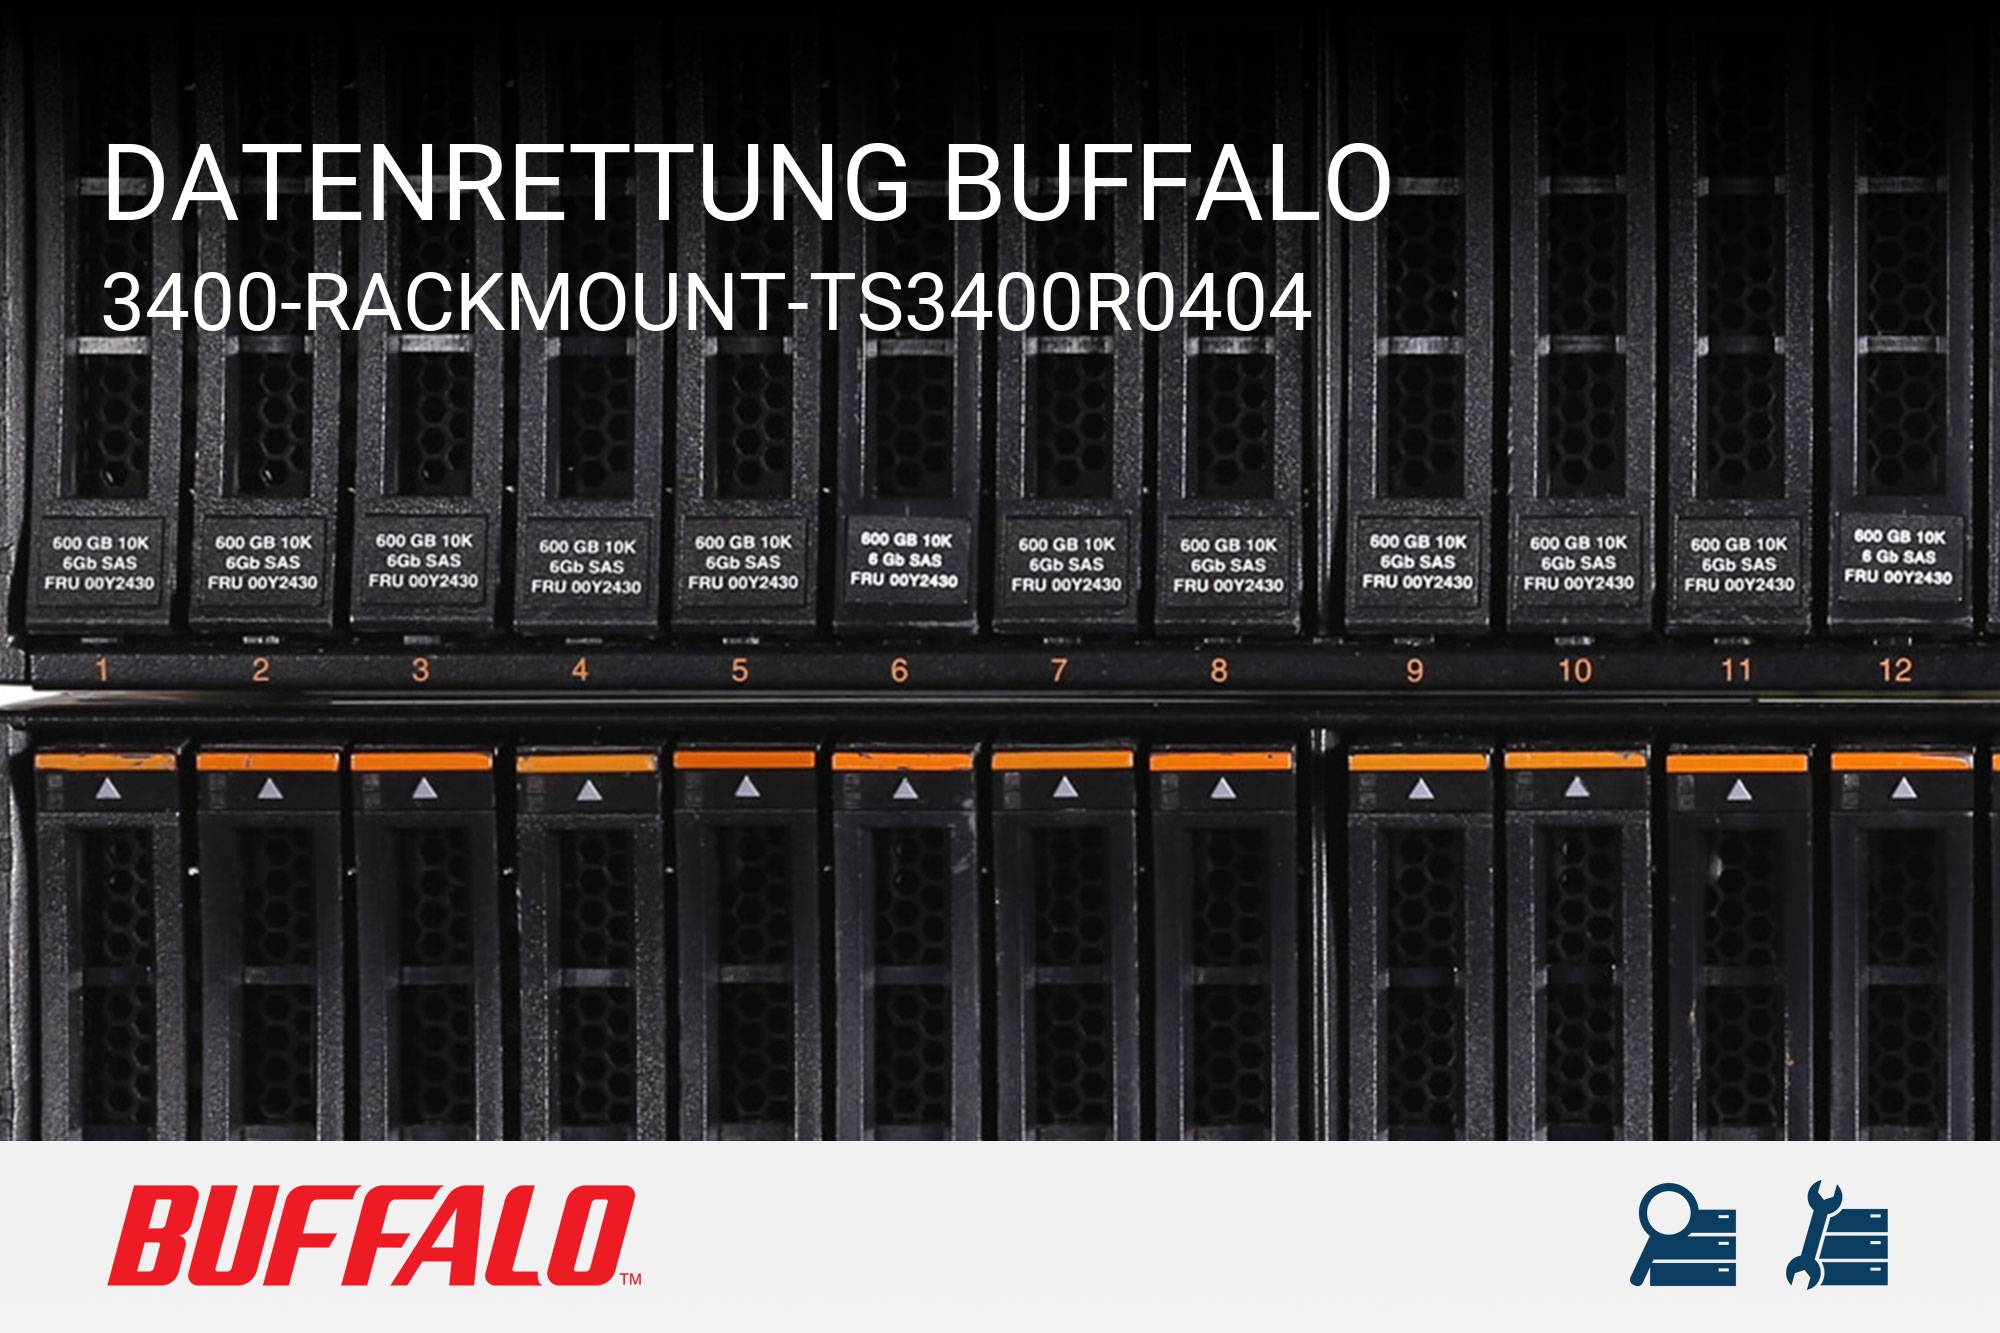 Buffalo 3400-Rackmount-TS3400R0404